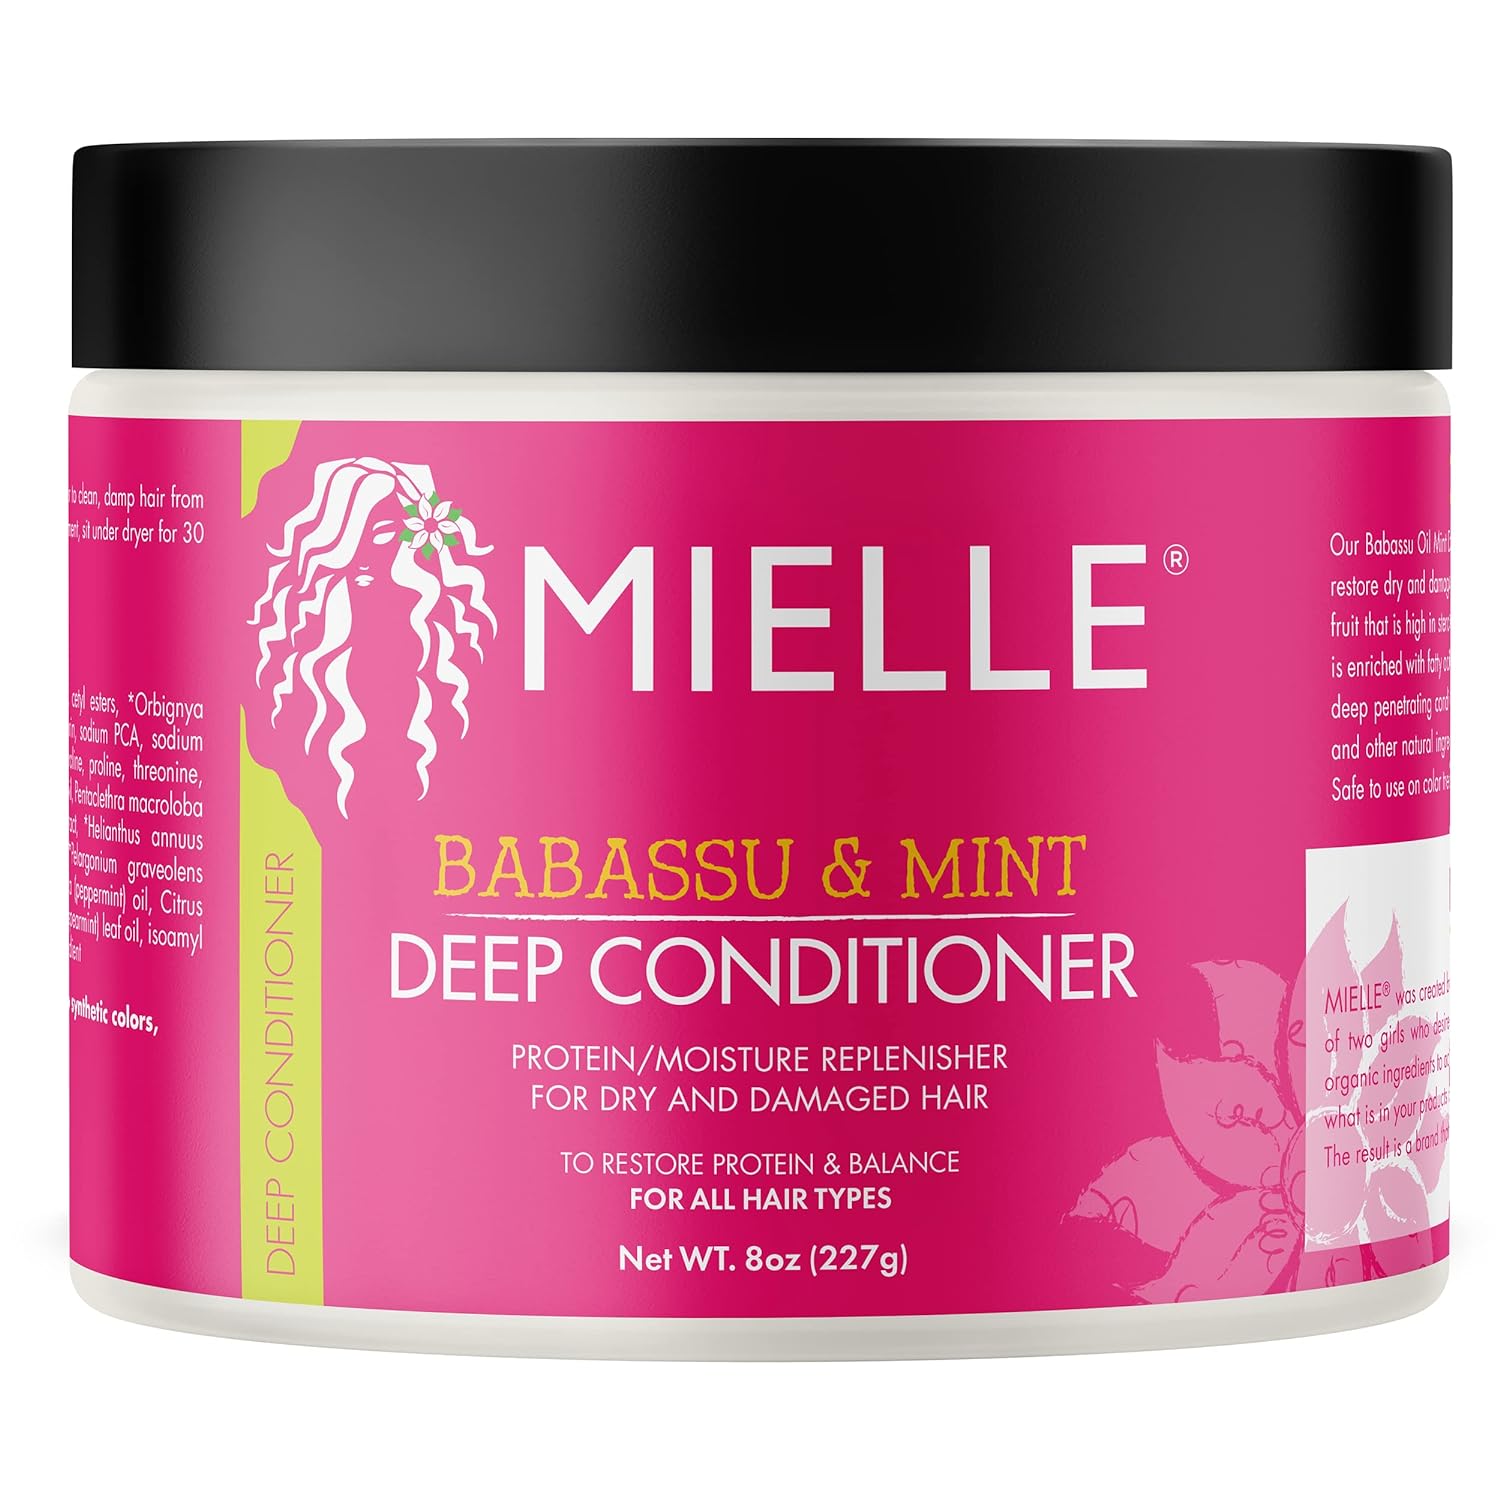 Mielle Organics Babassu & Mint Deep Conditioner with Protein